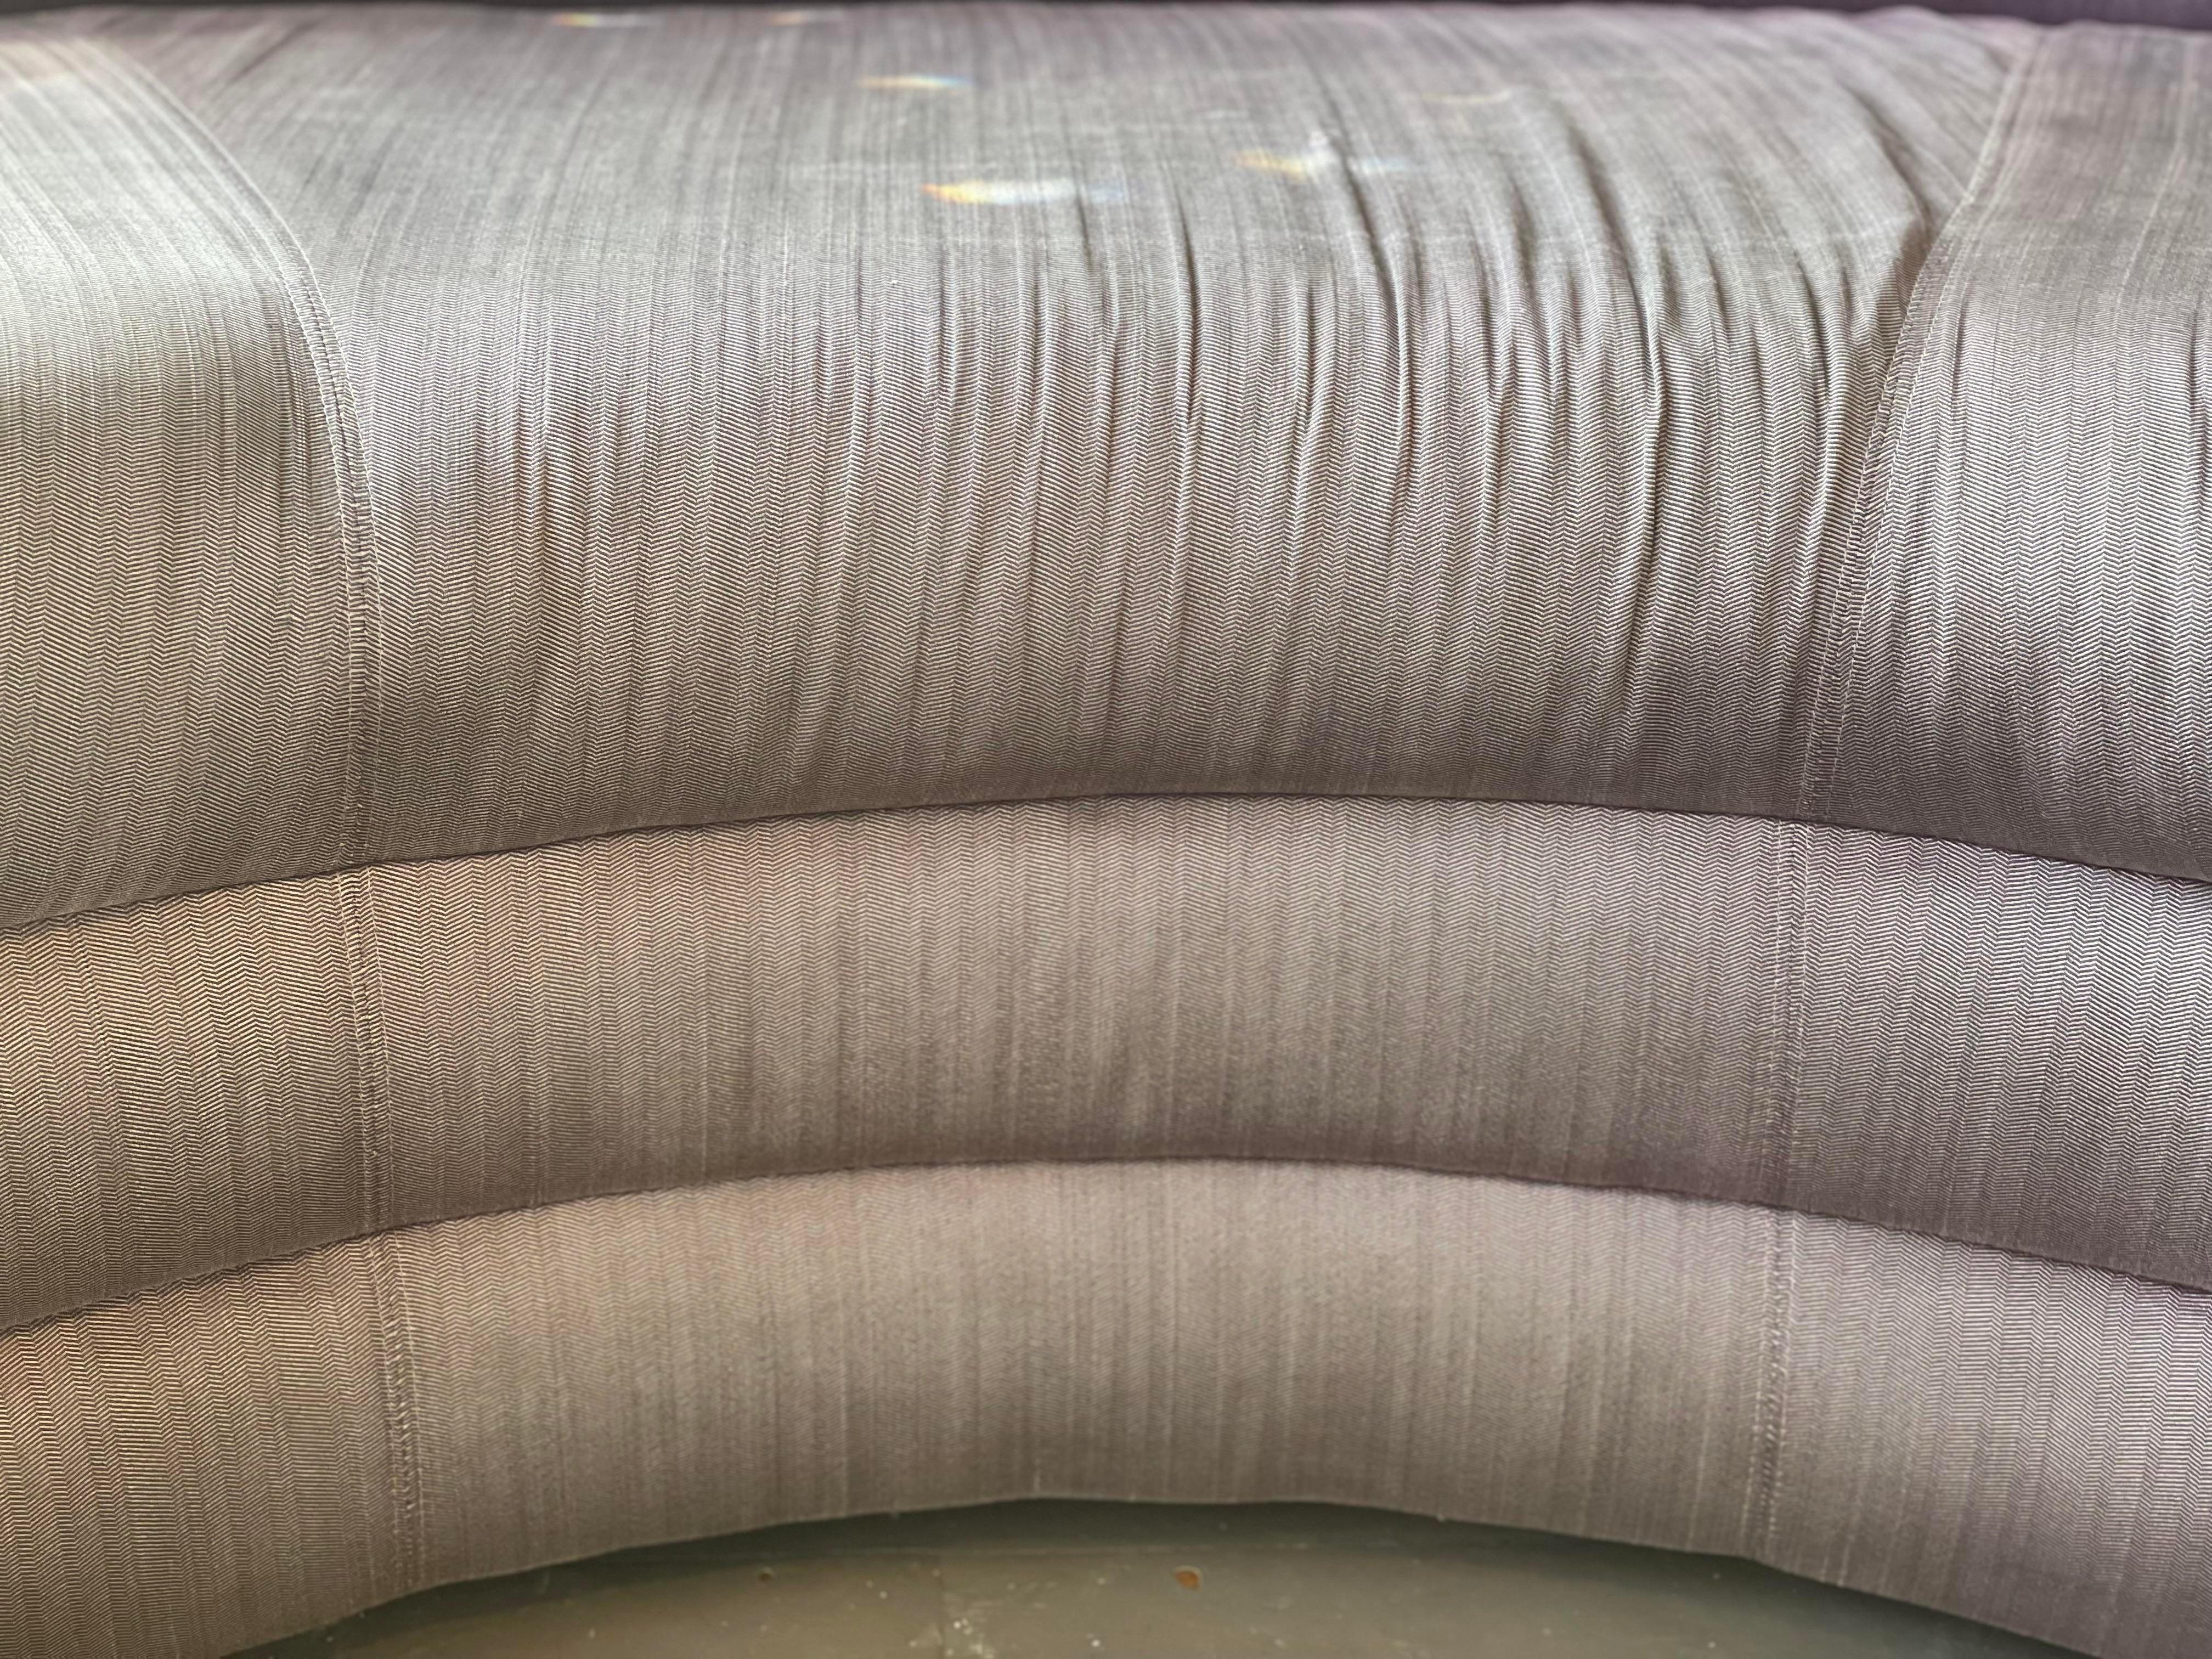 Silk Vintage Vladimir Kagan for Directional Curved Sofa